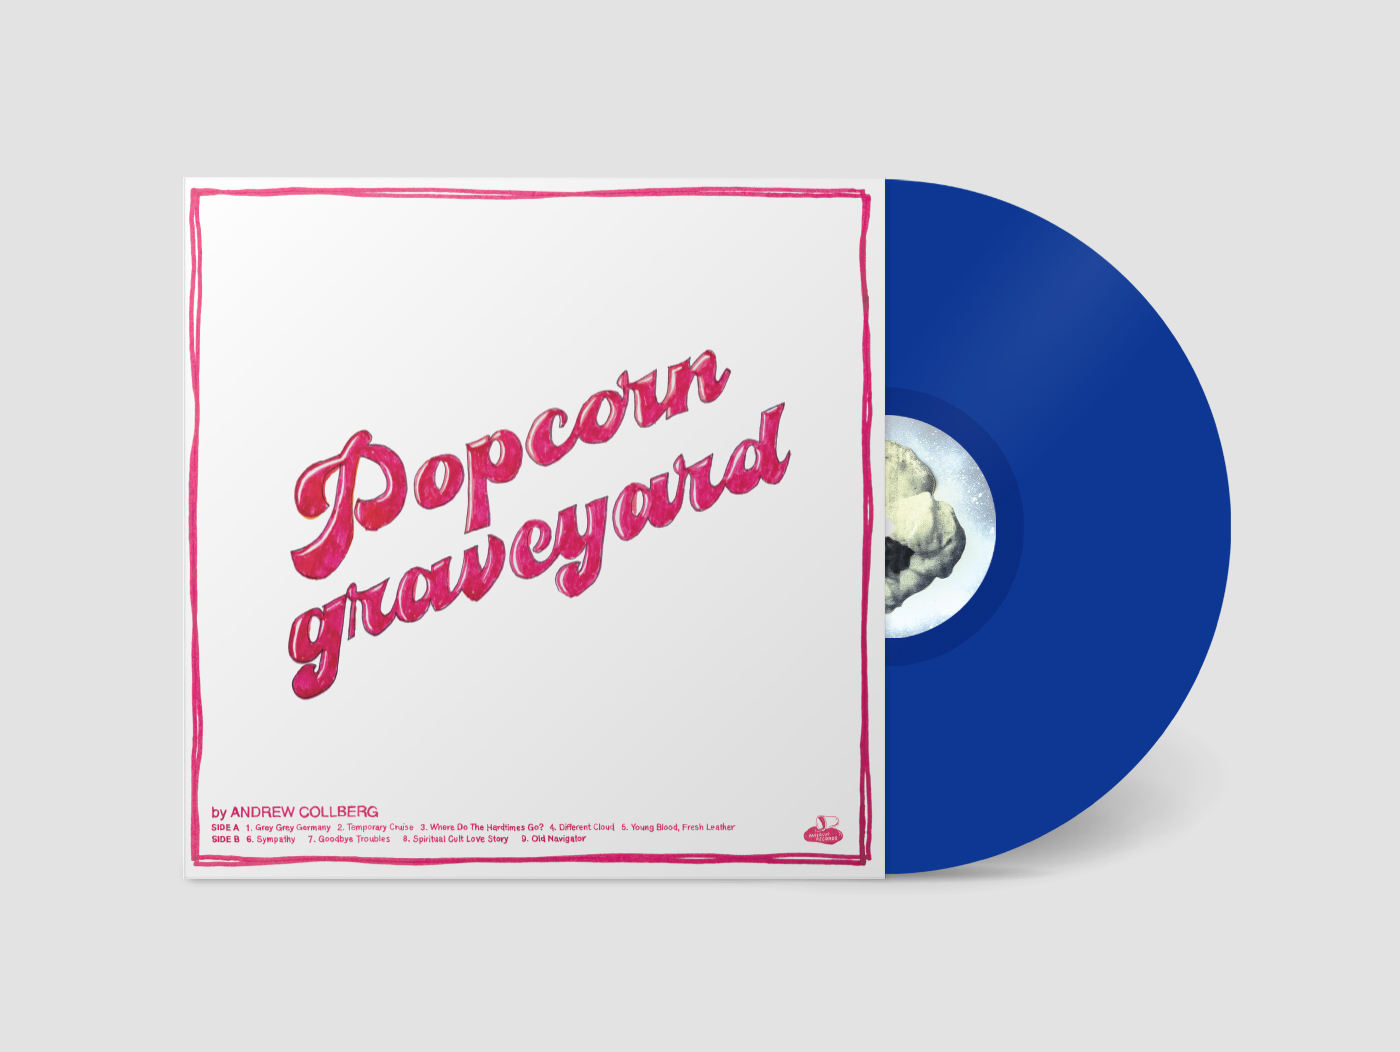 Pre-Order now: Andrew Collberg’s “Popcorn Graveyard” Vinyl LP